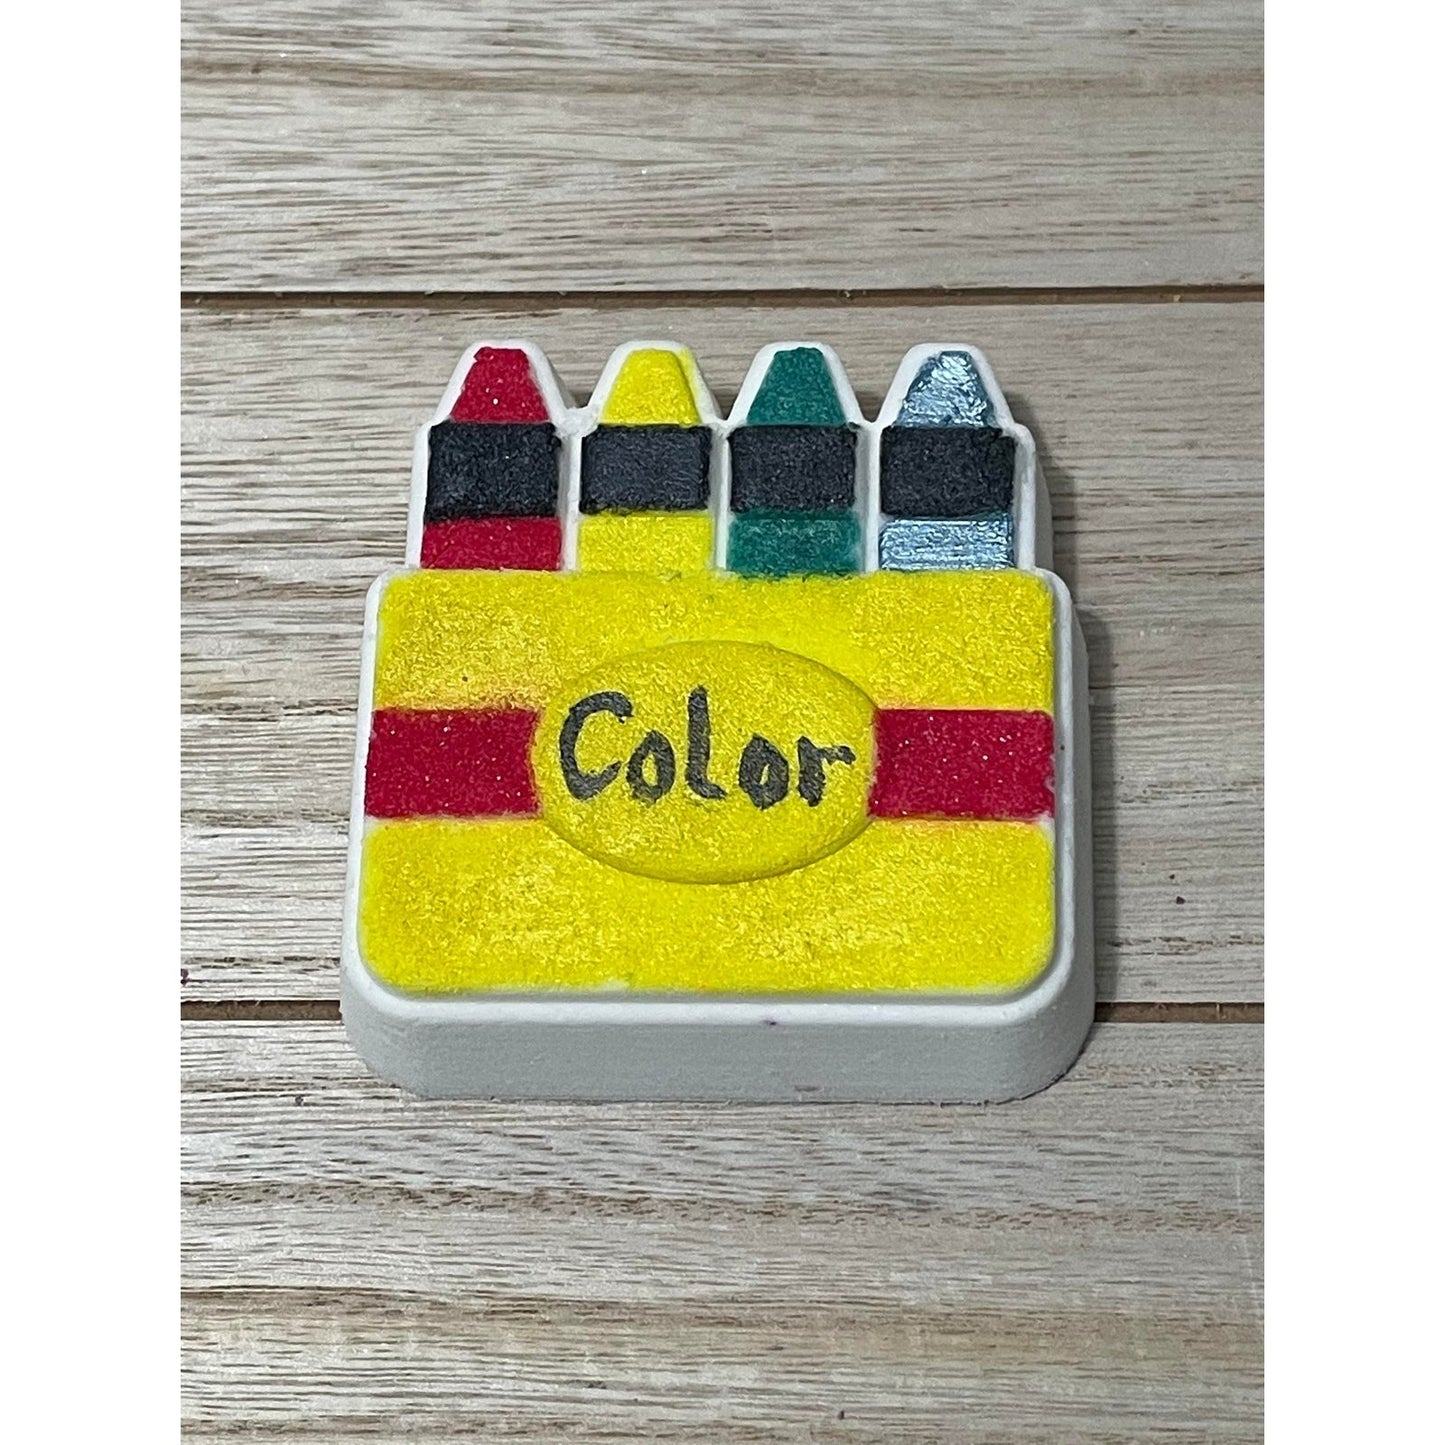 Mini Box of Crayons Hybrid Mold